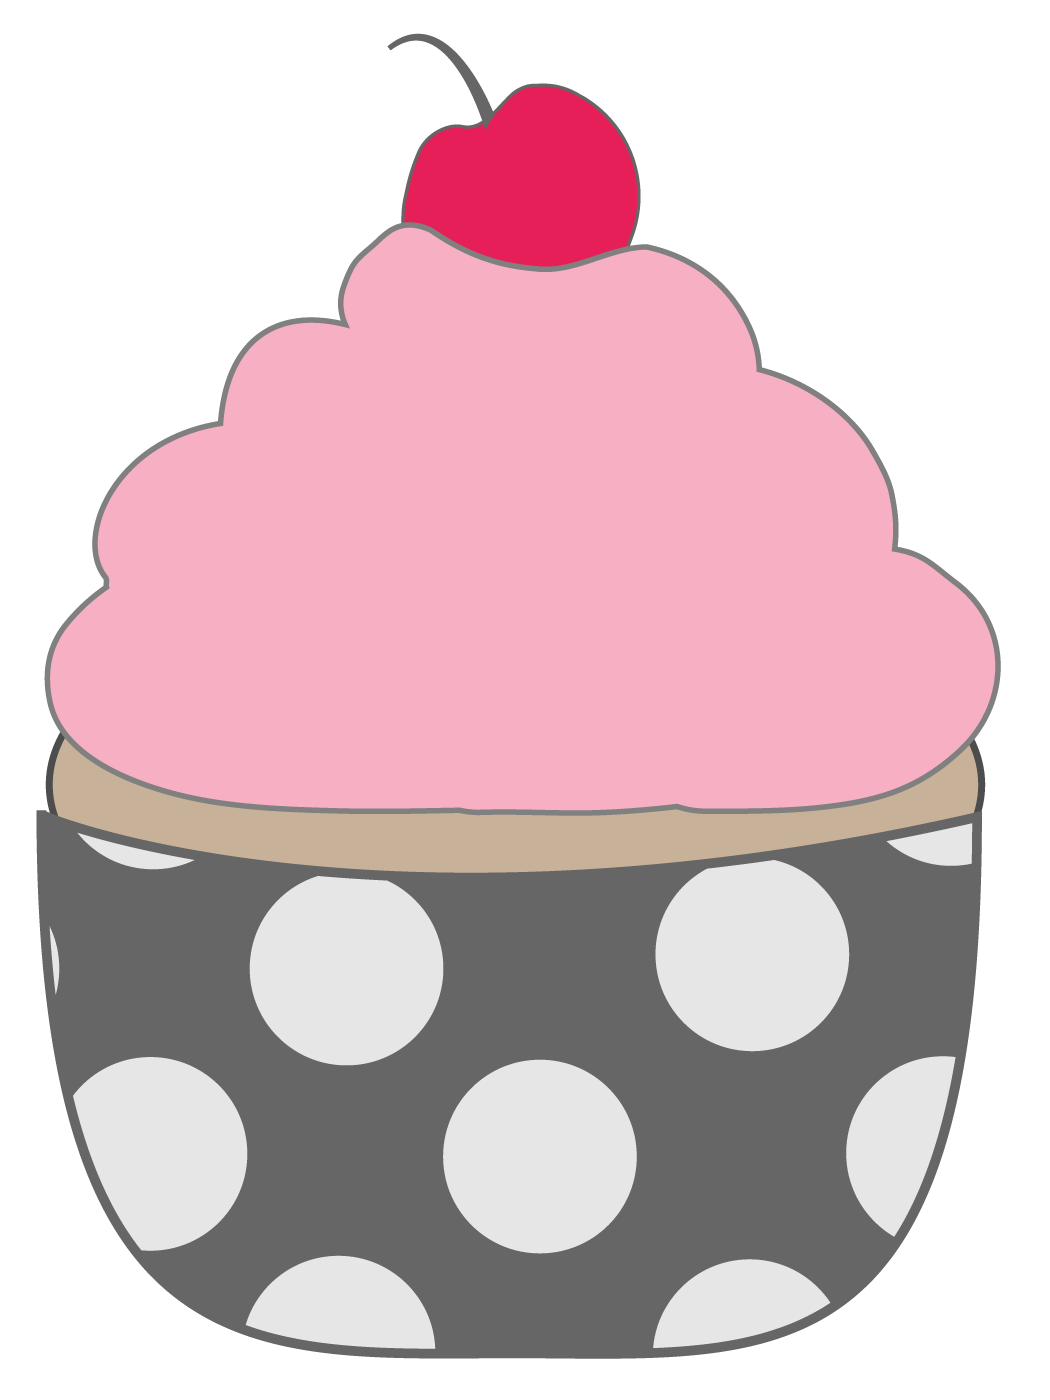 clipart cupcake february